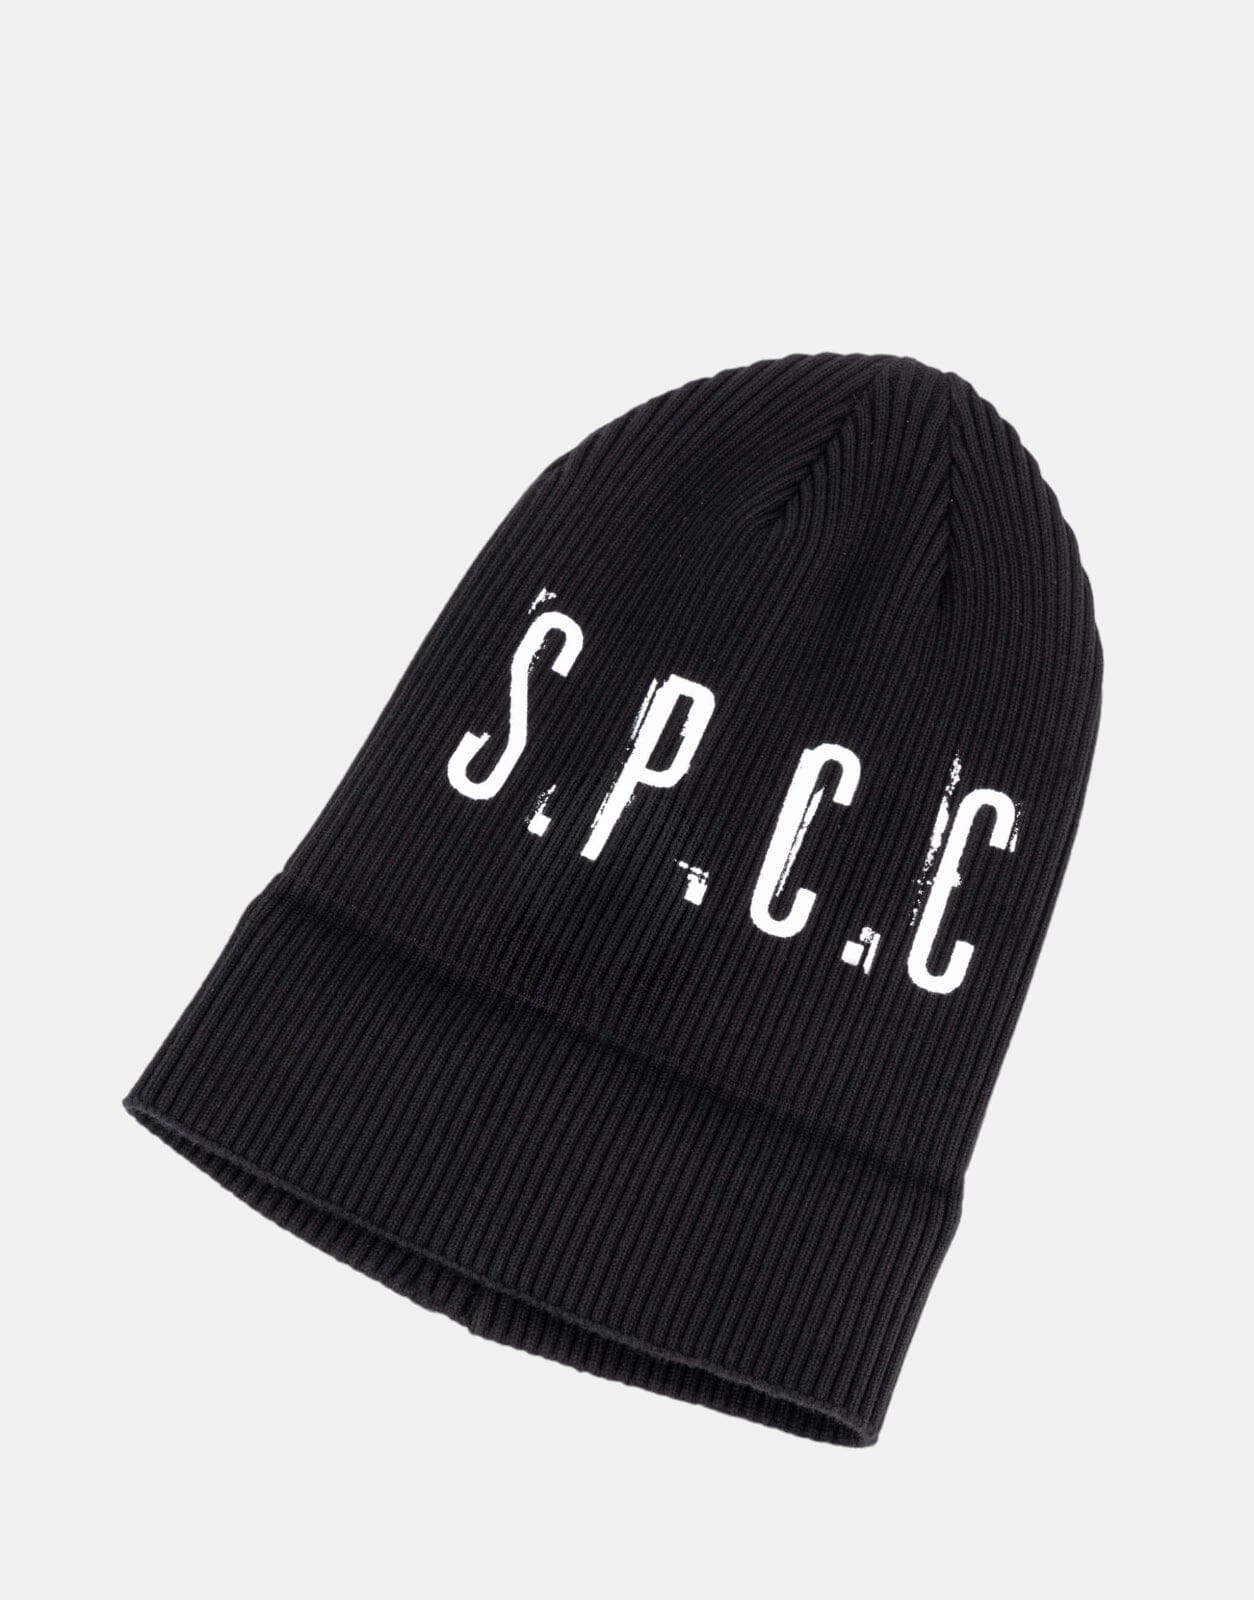 SPCC Fawcett Black Beanie - Subwear